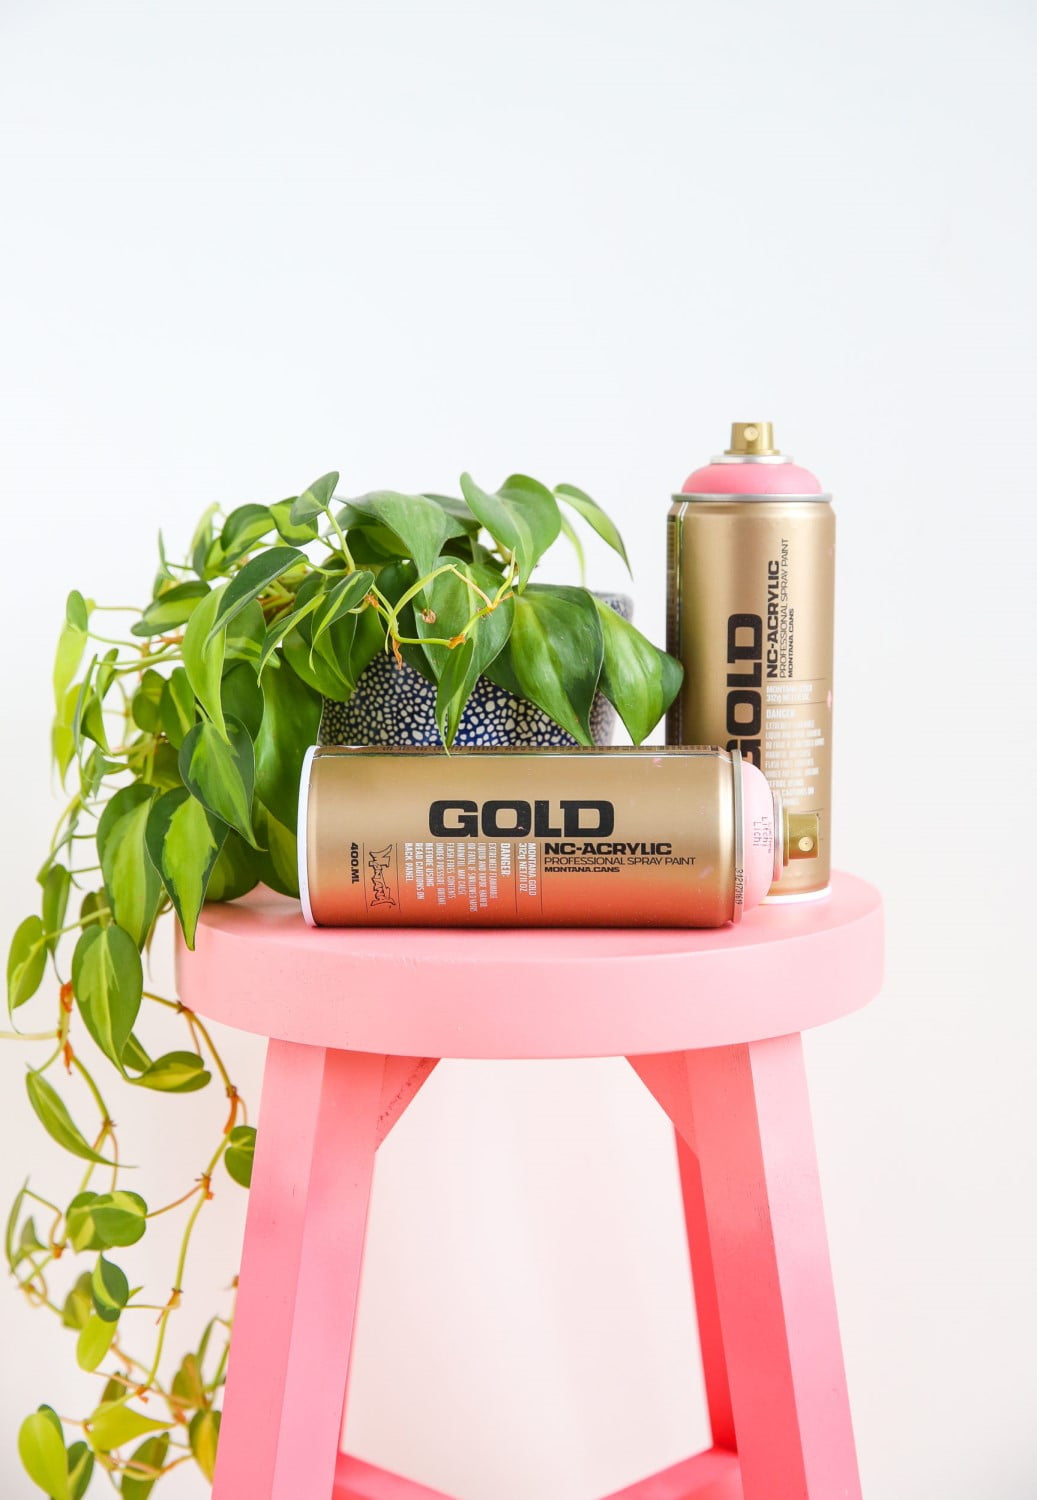 Montana Gold Acrylic Professional Spray Paint 400 ml - Shock Pink